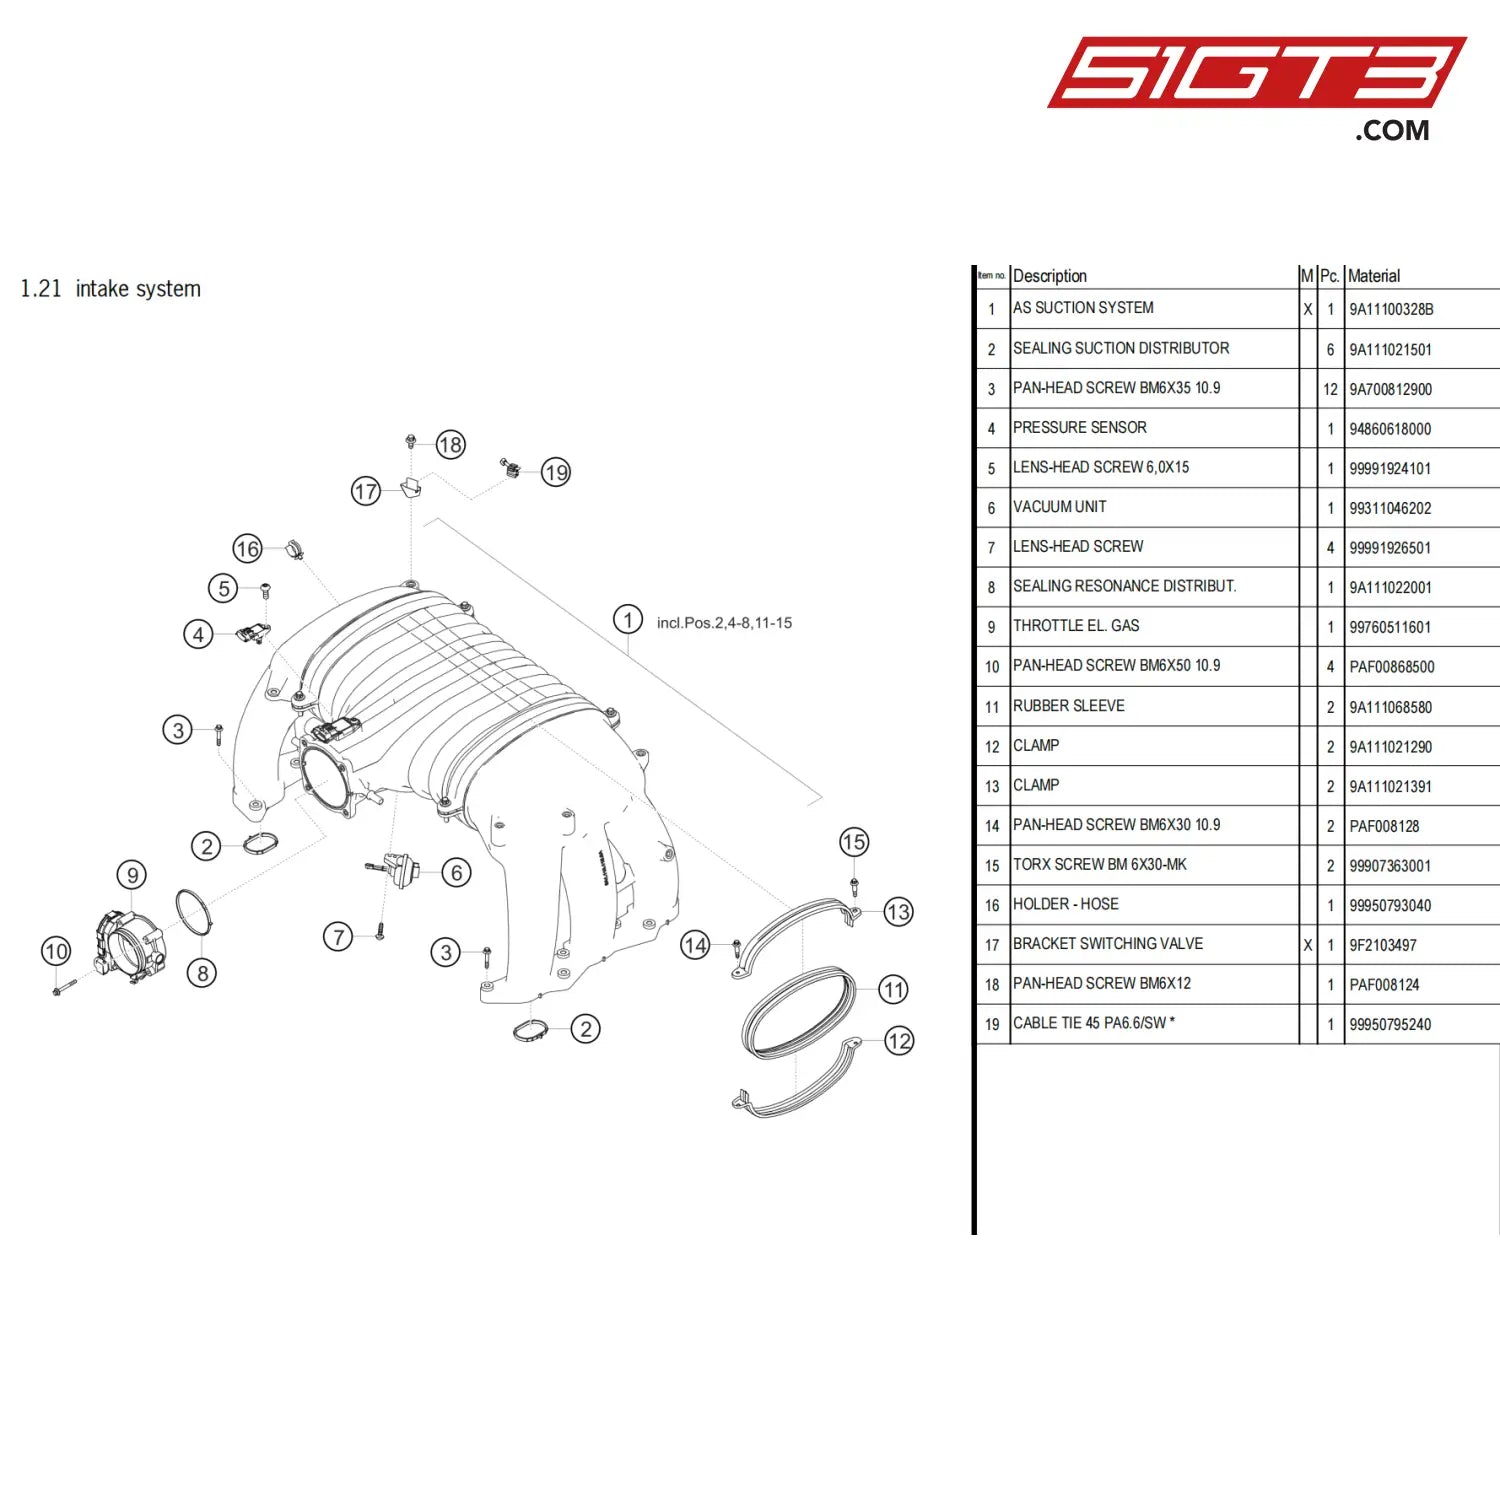 Sealing Suction Distributor - 9A111021501 [Porsche 718 Cayman Gt4 Clubsport] Intake System